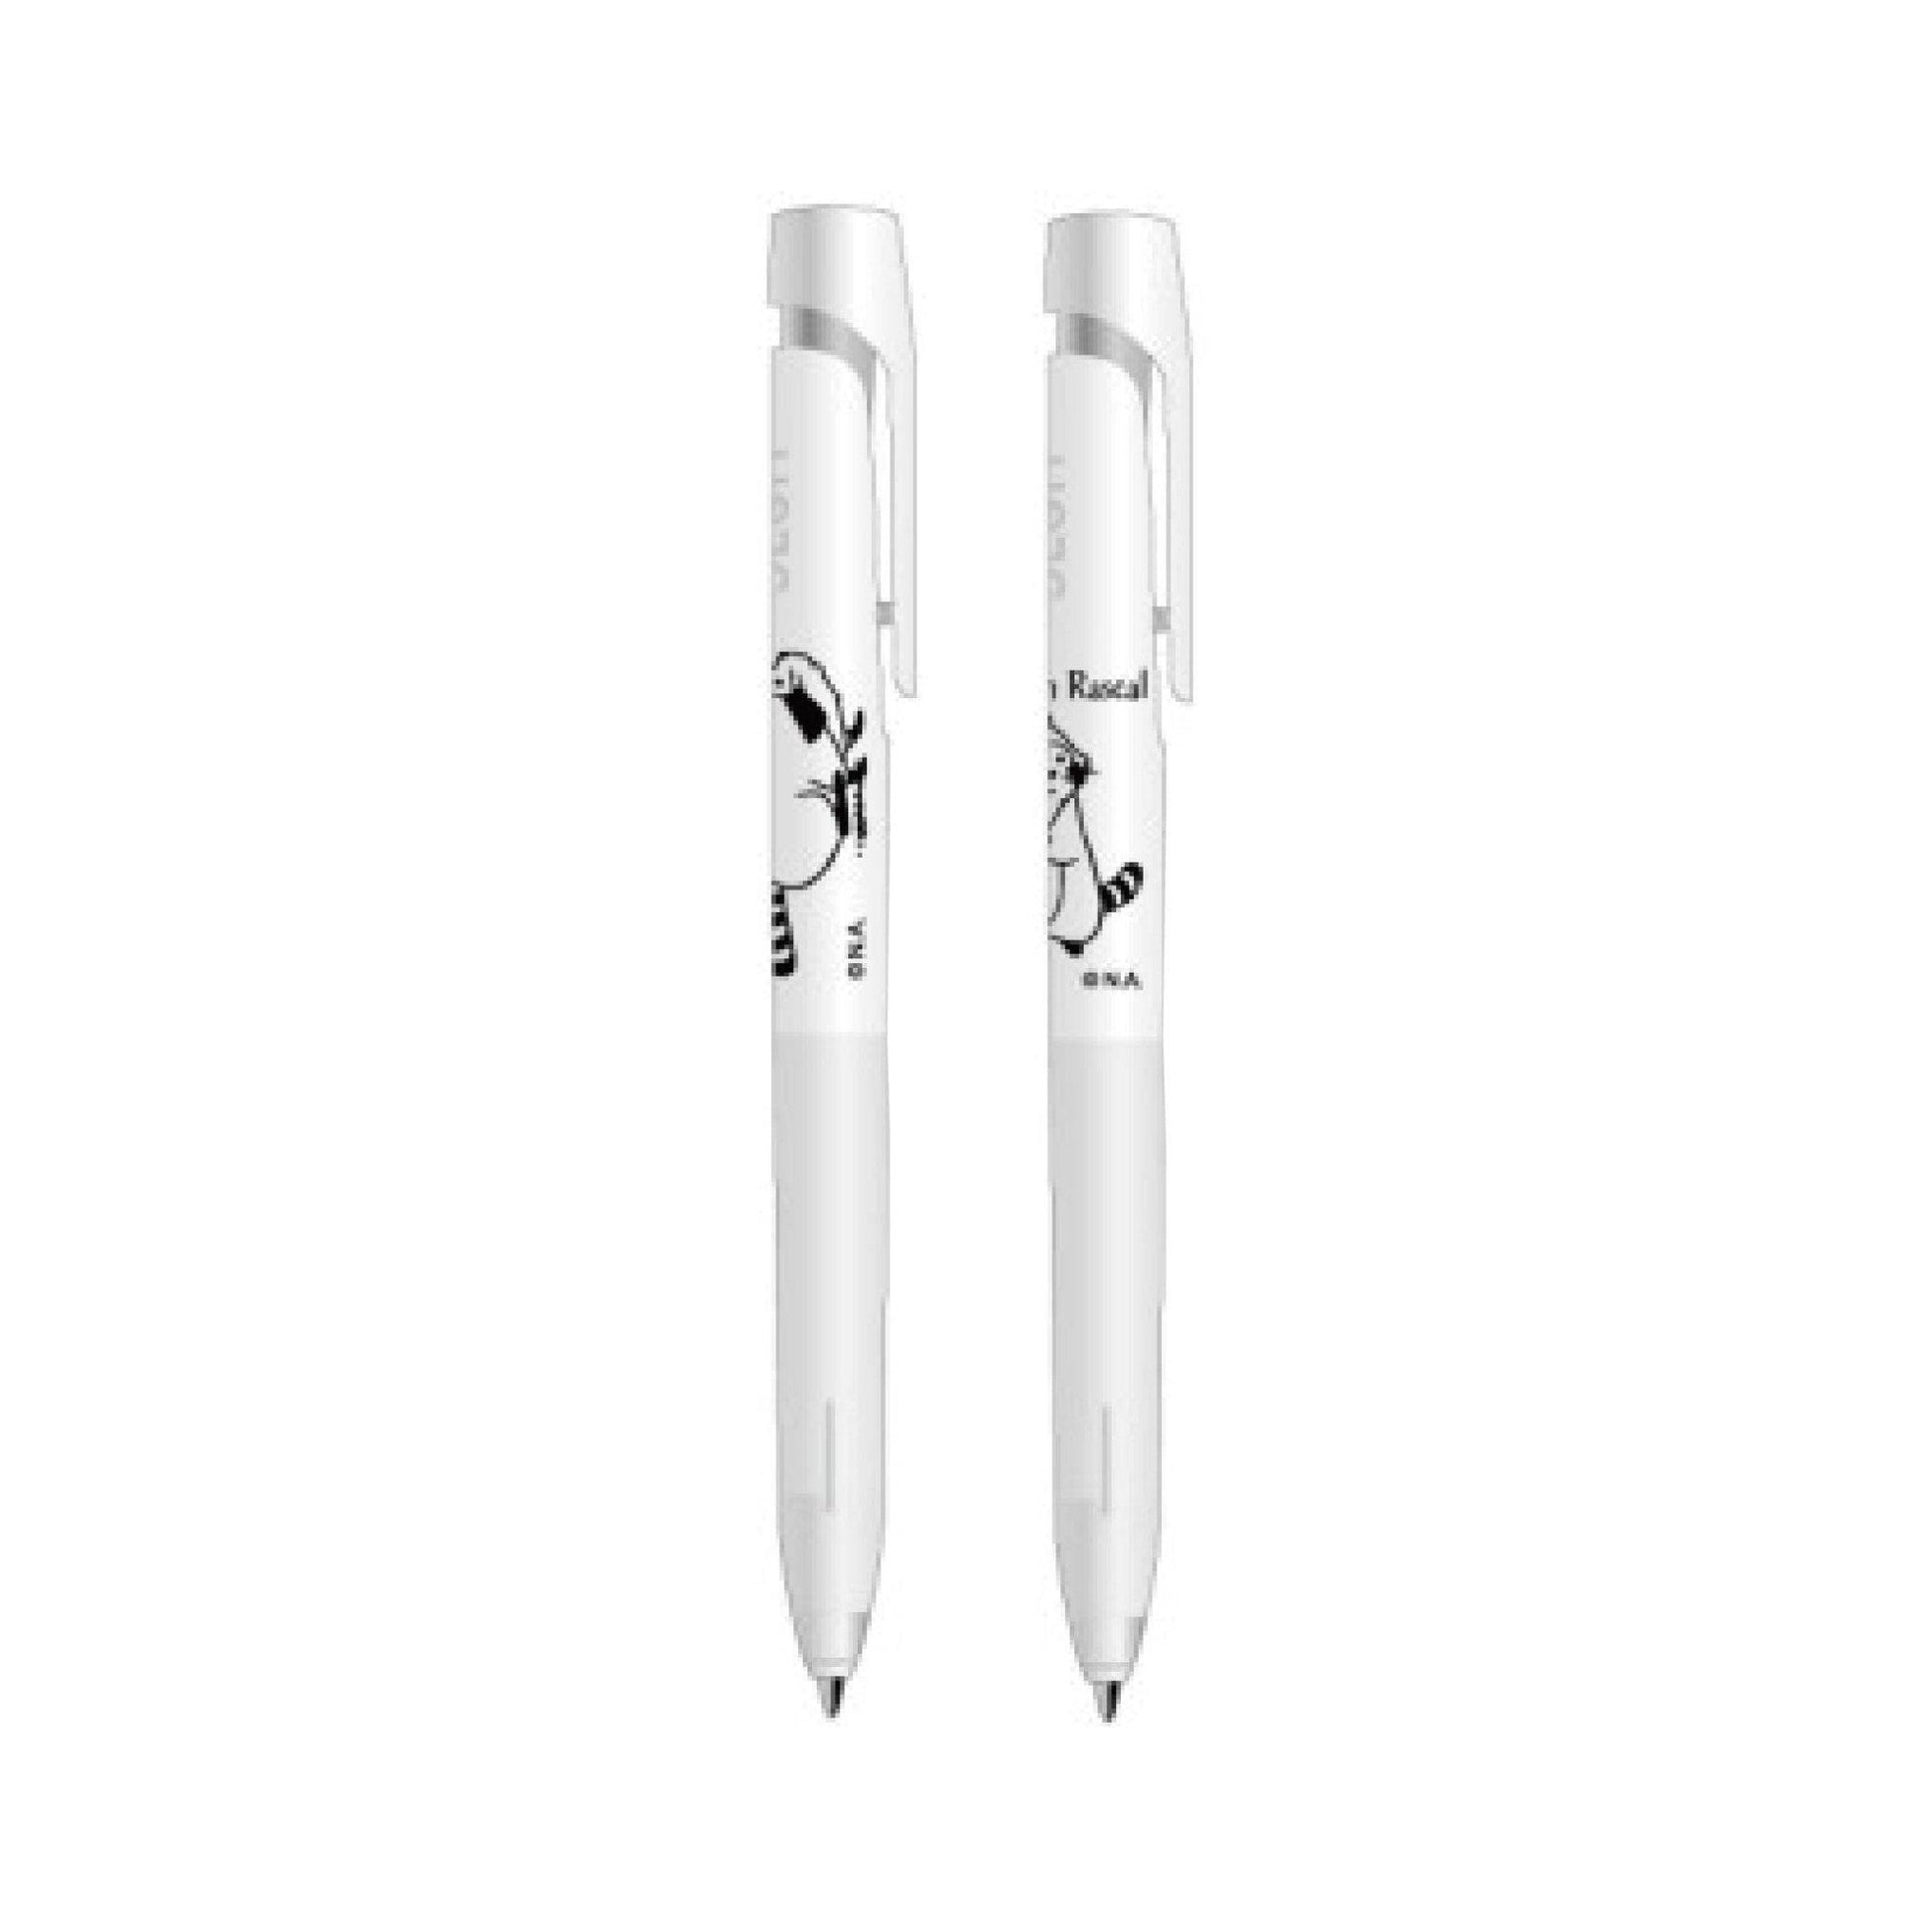 HISAGOxZebra BLEN Raccoon Rascal 0.7mm medium oil pen white stick black ink walking coin - CHL-STORE 